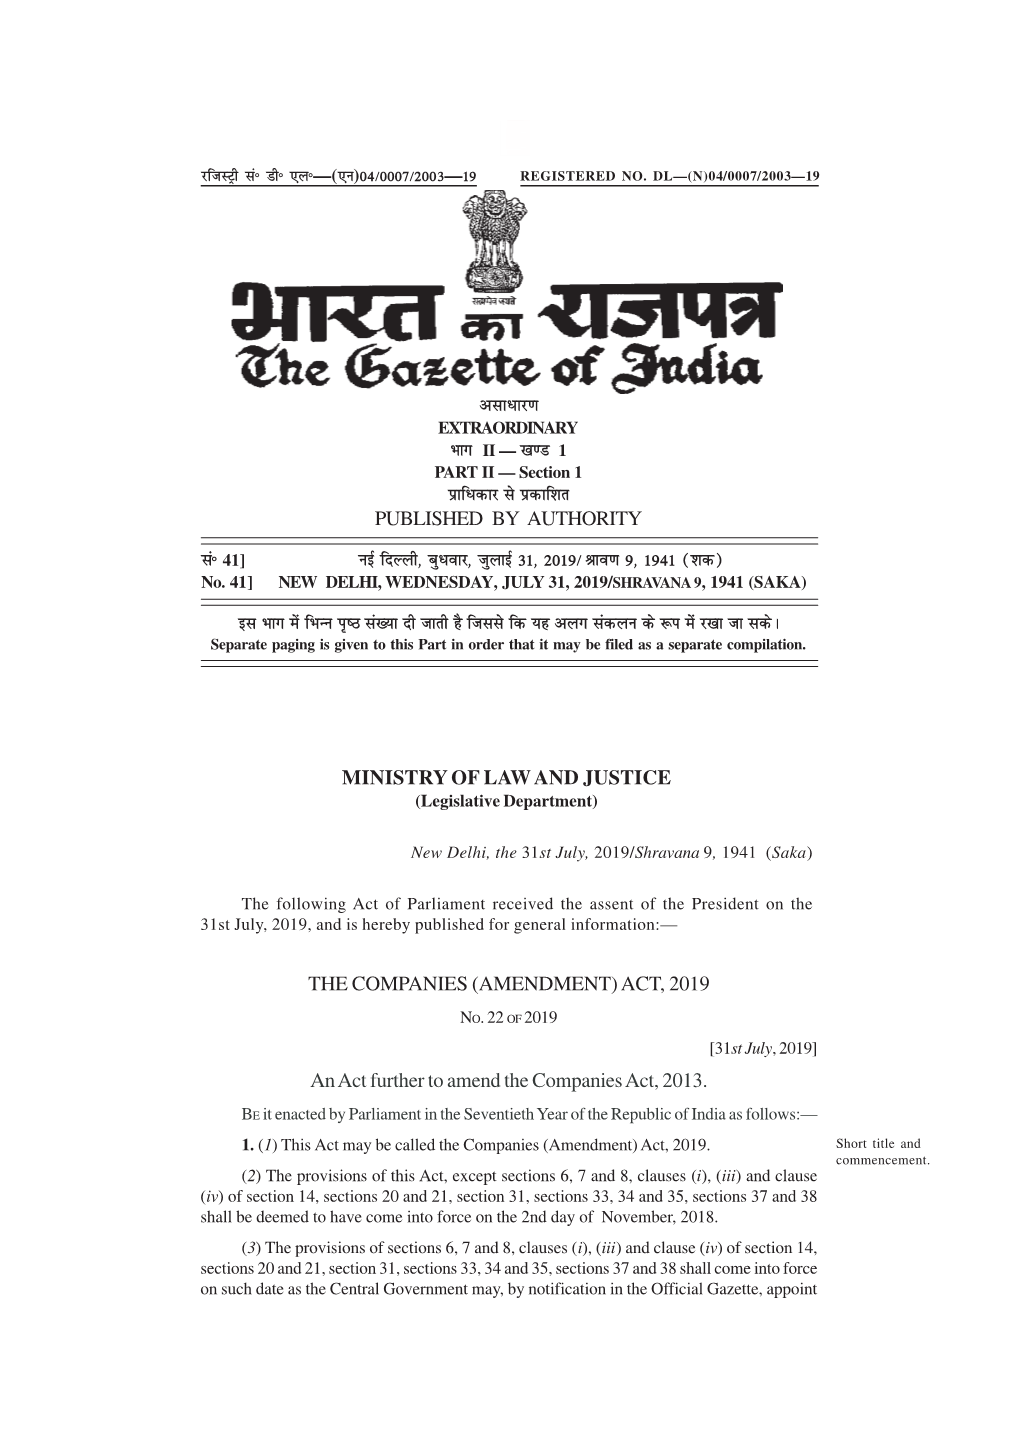 Companies (Amendment) Act, 2019